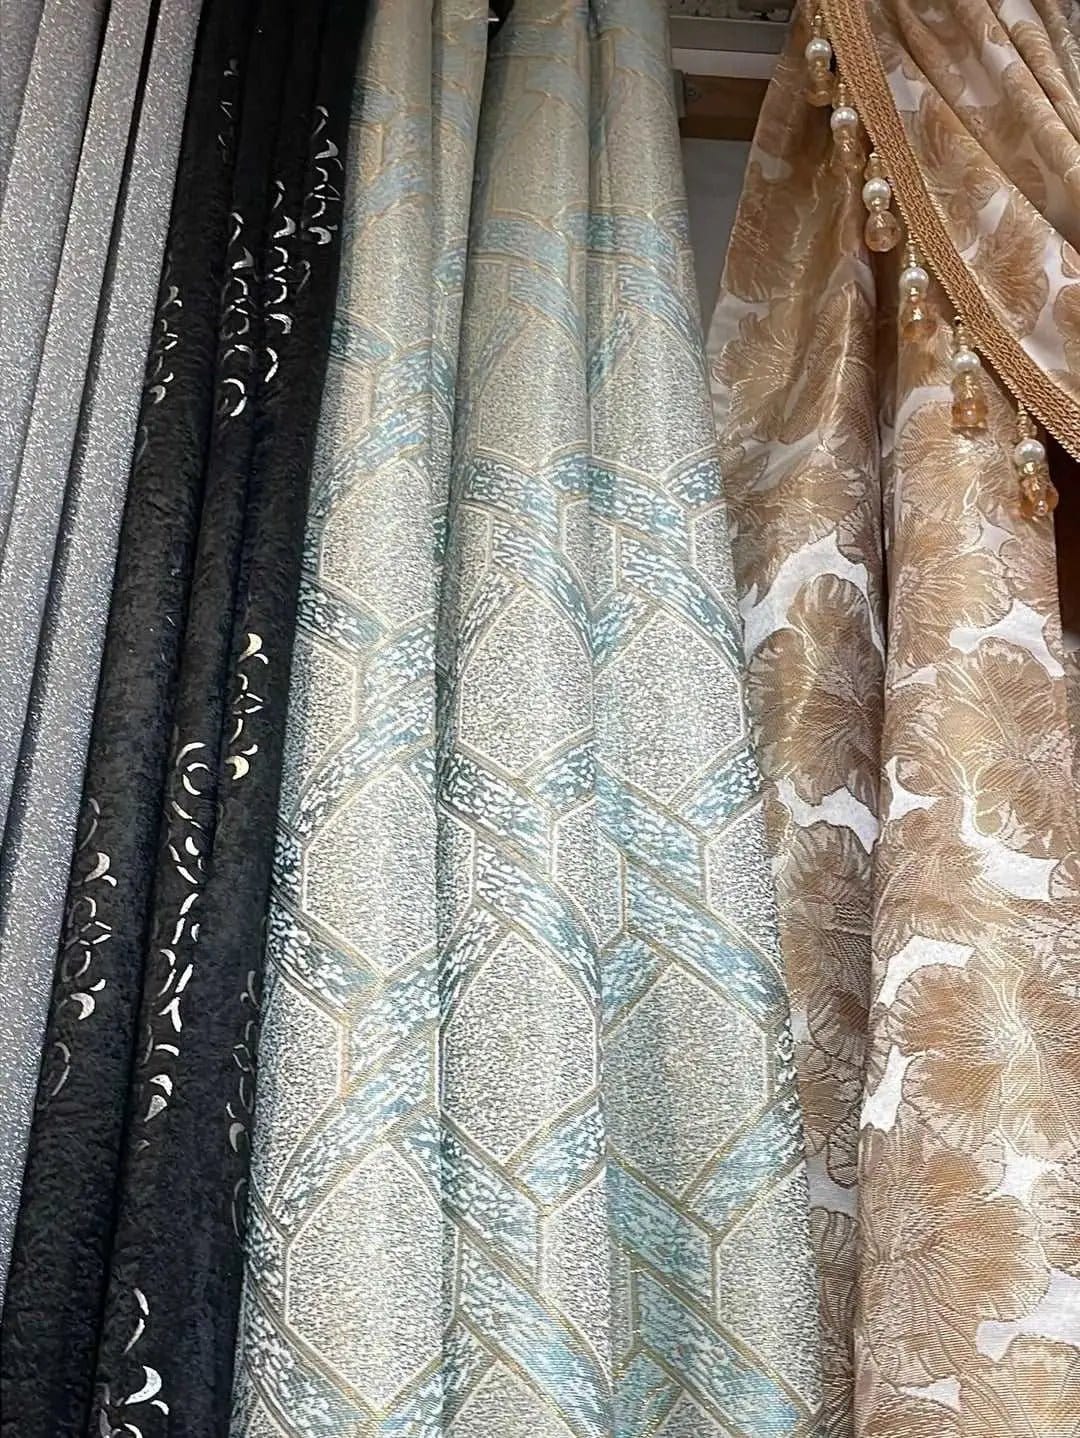 Linen World Jacquard Geometry Curtain Panel